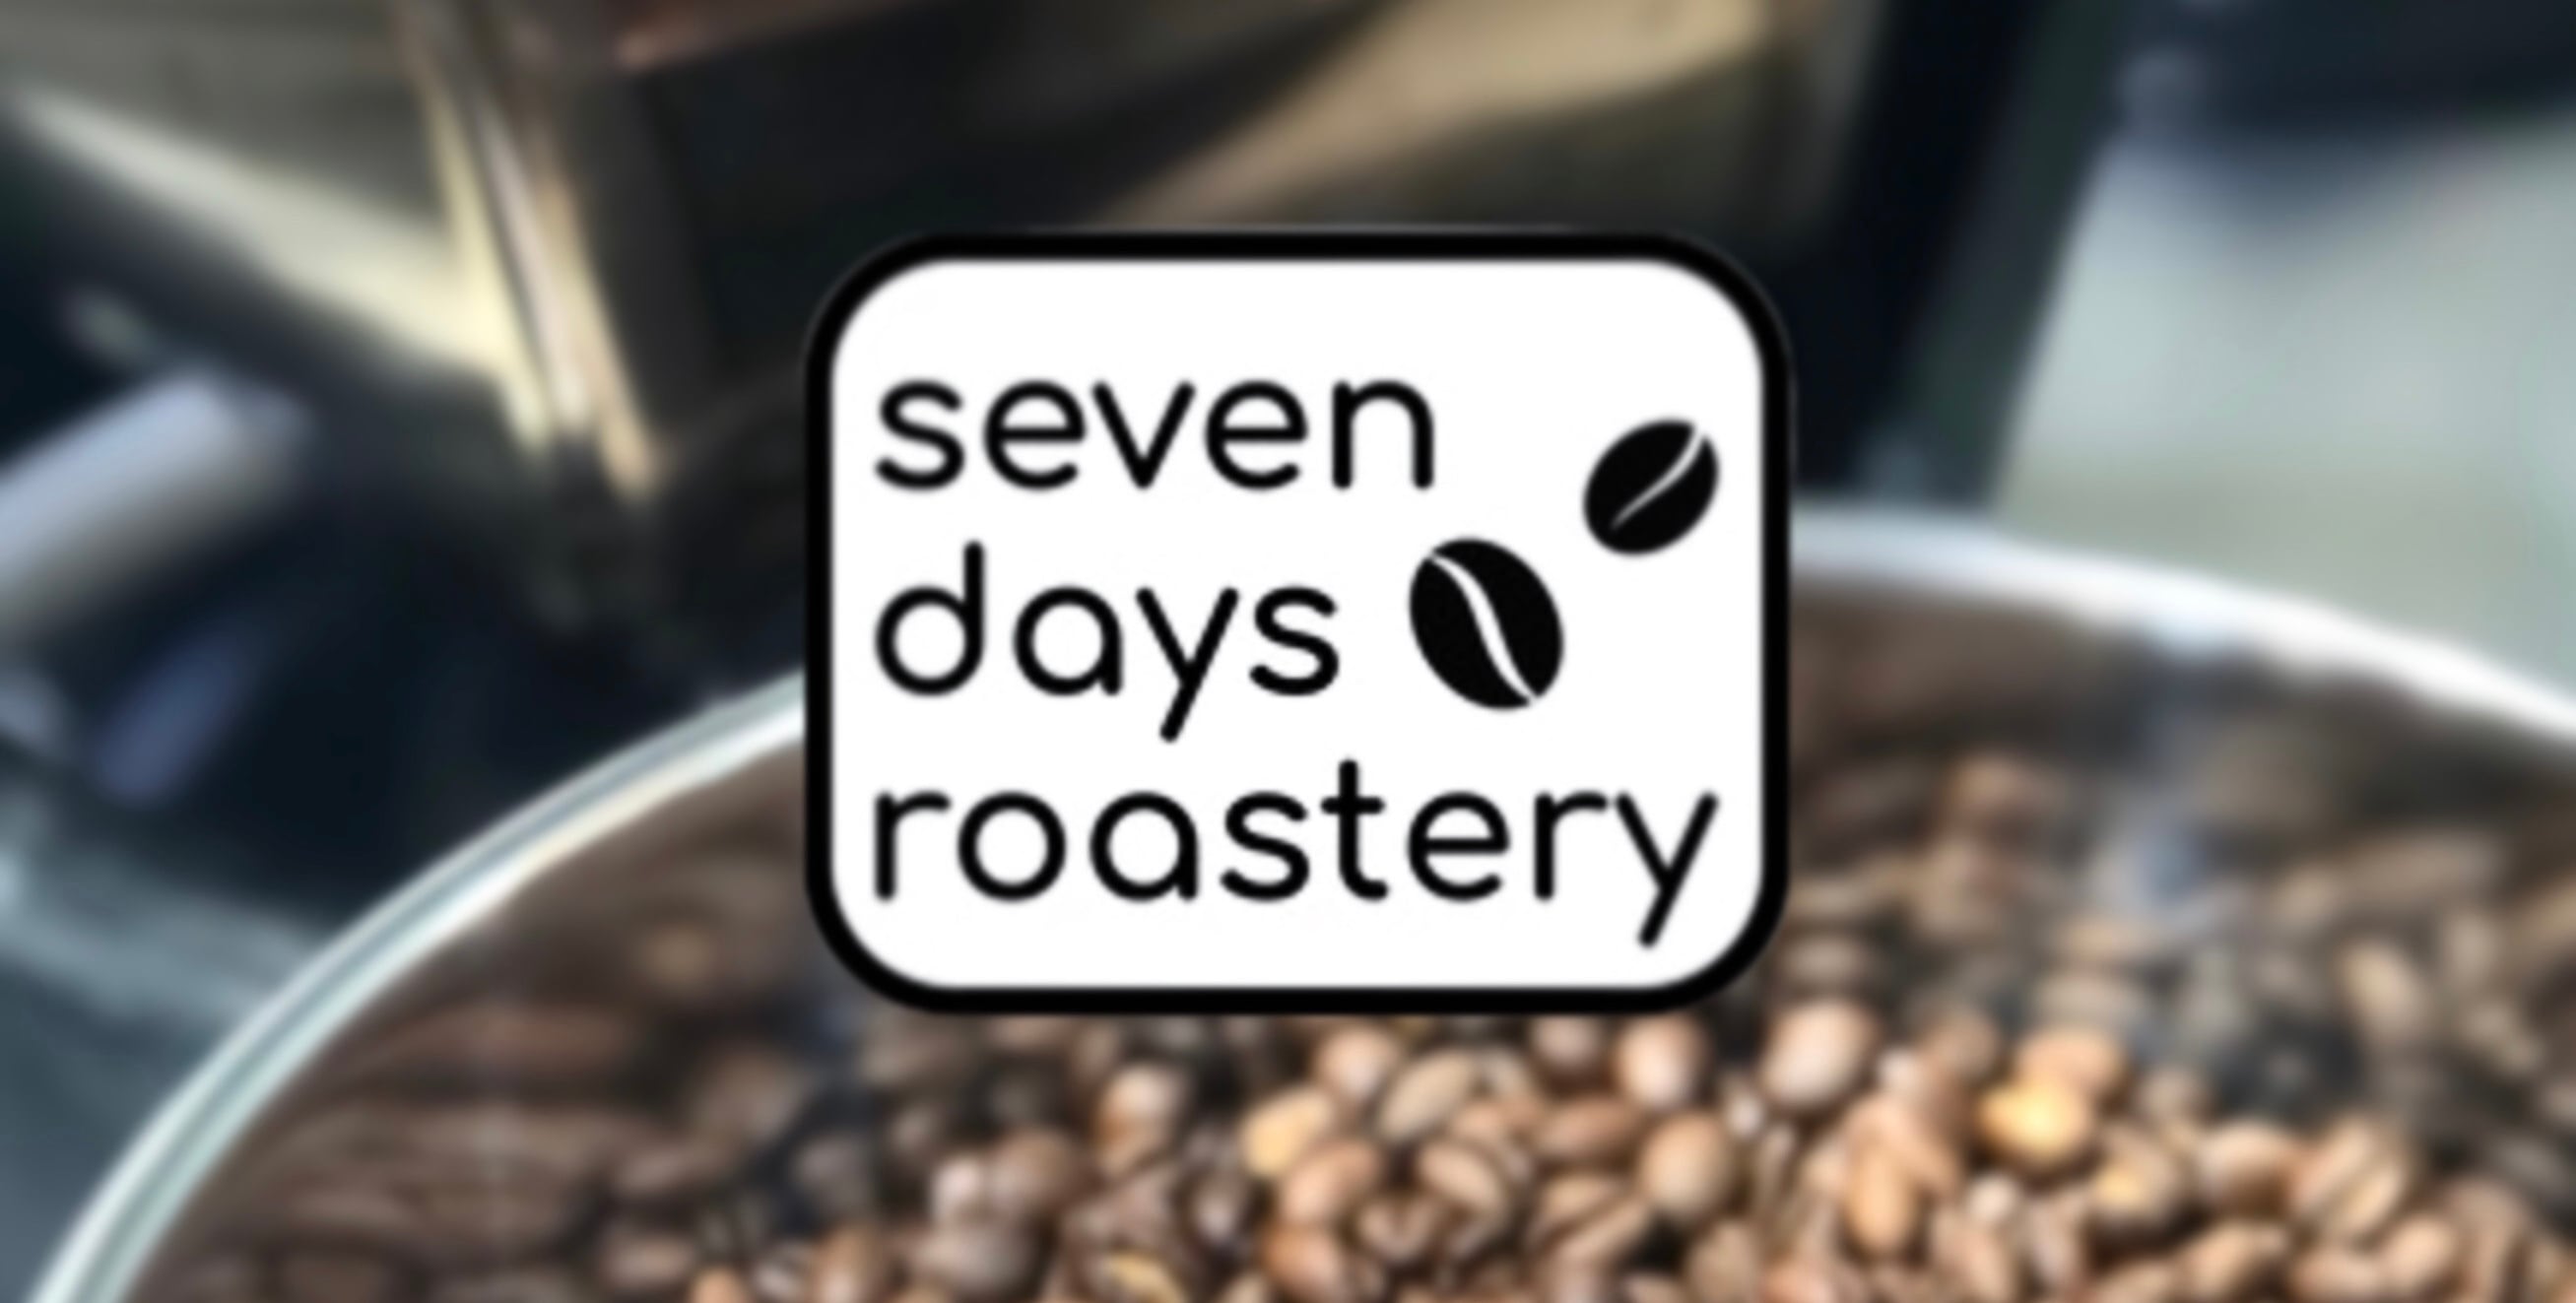 seven days roastery